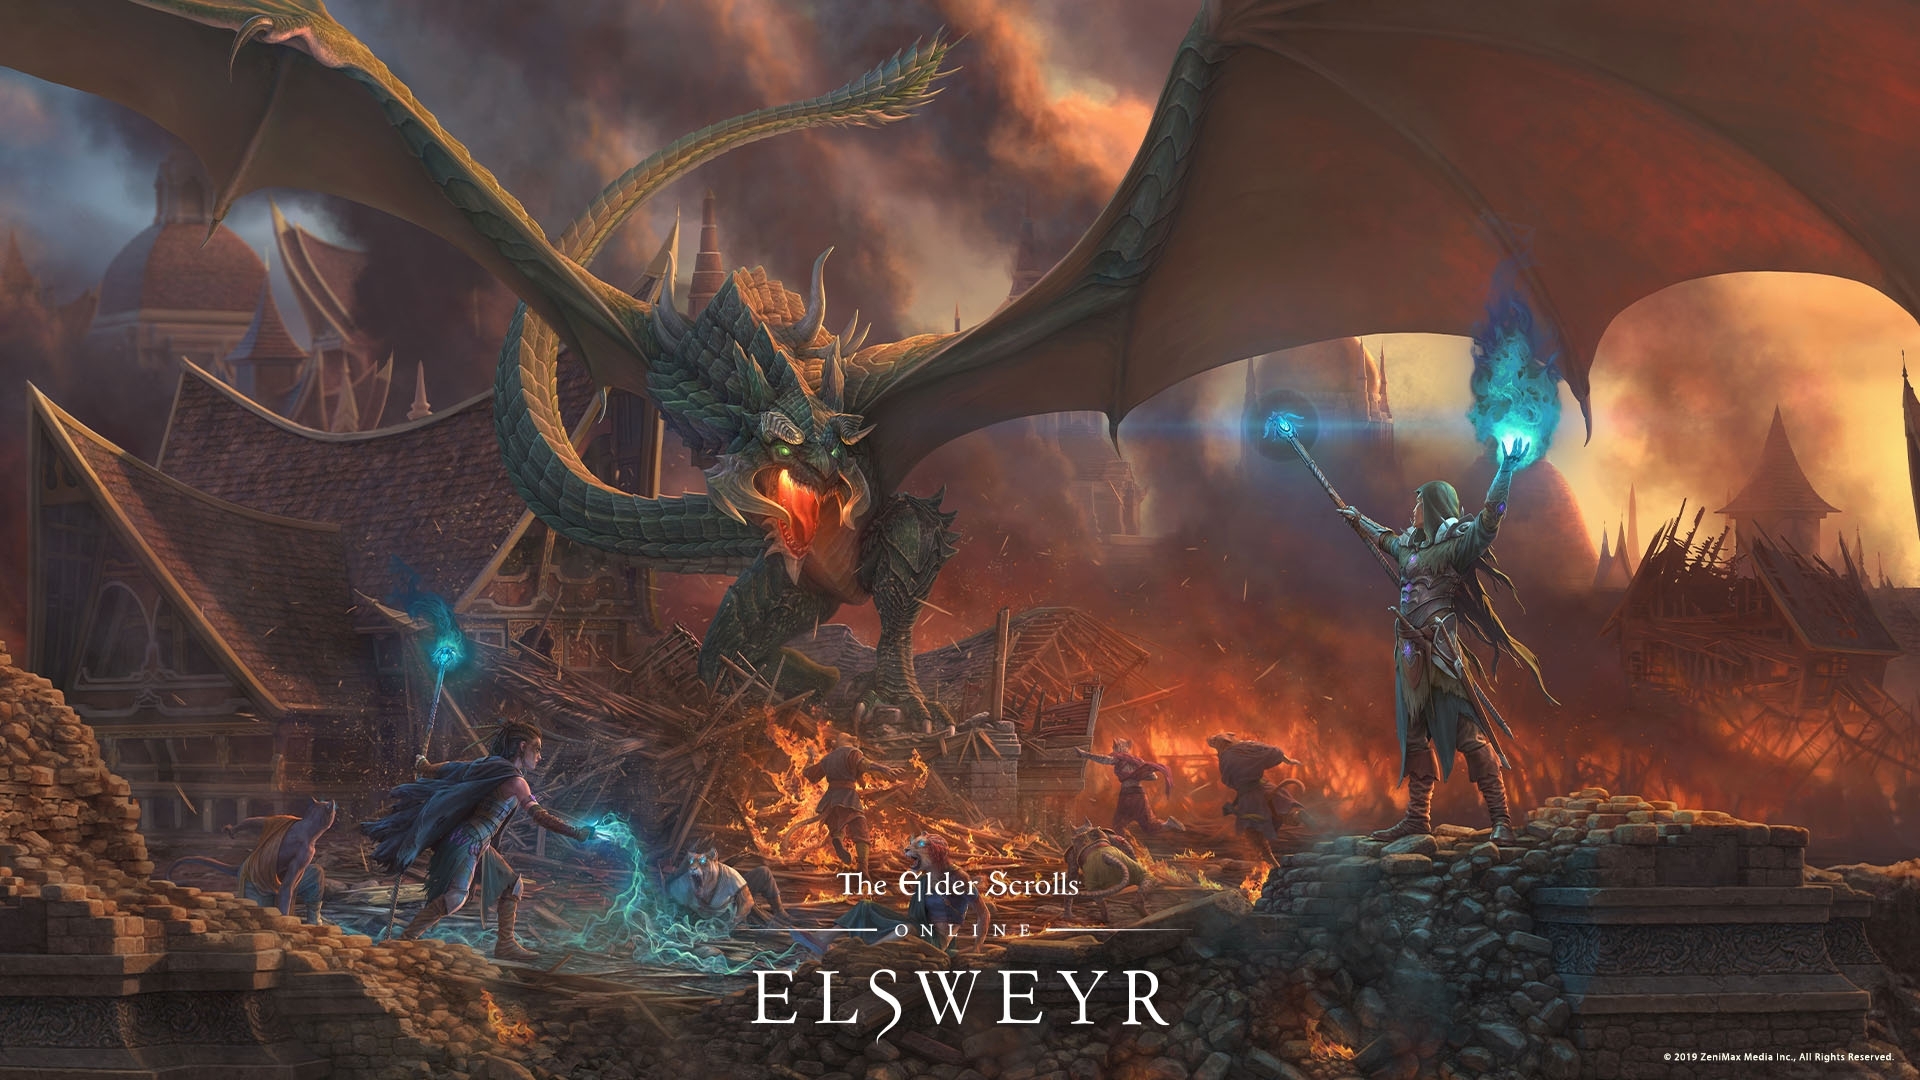 The Elder Scrolls Online The Elder Scrolls Online Elsweyr RPG Video Games PC Gaming 2019 Year Dragon 1920x1080